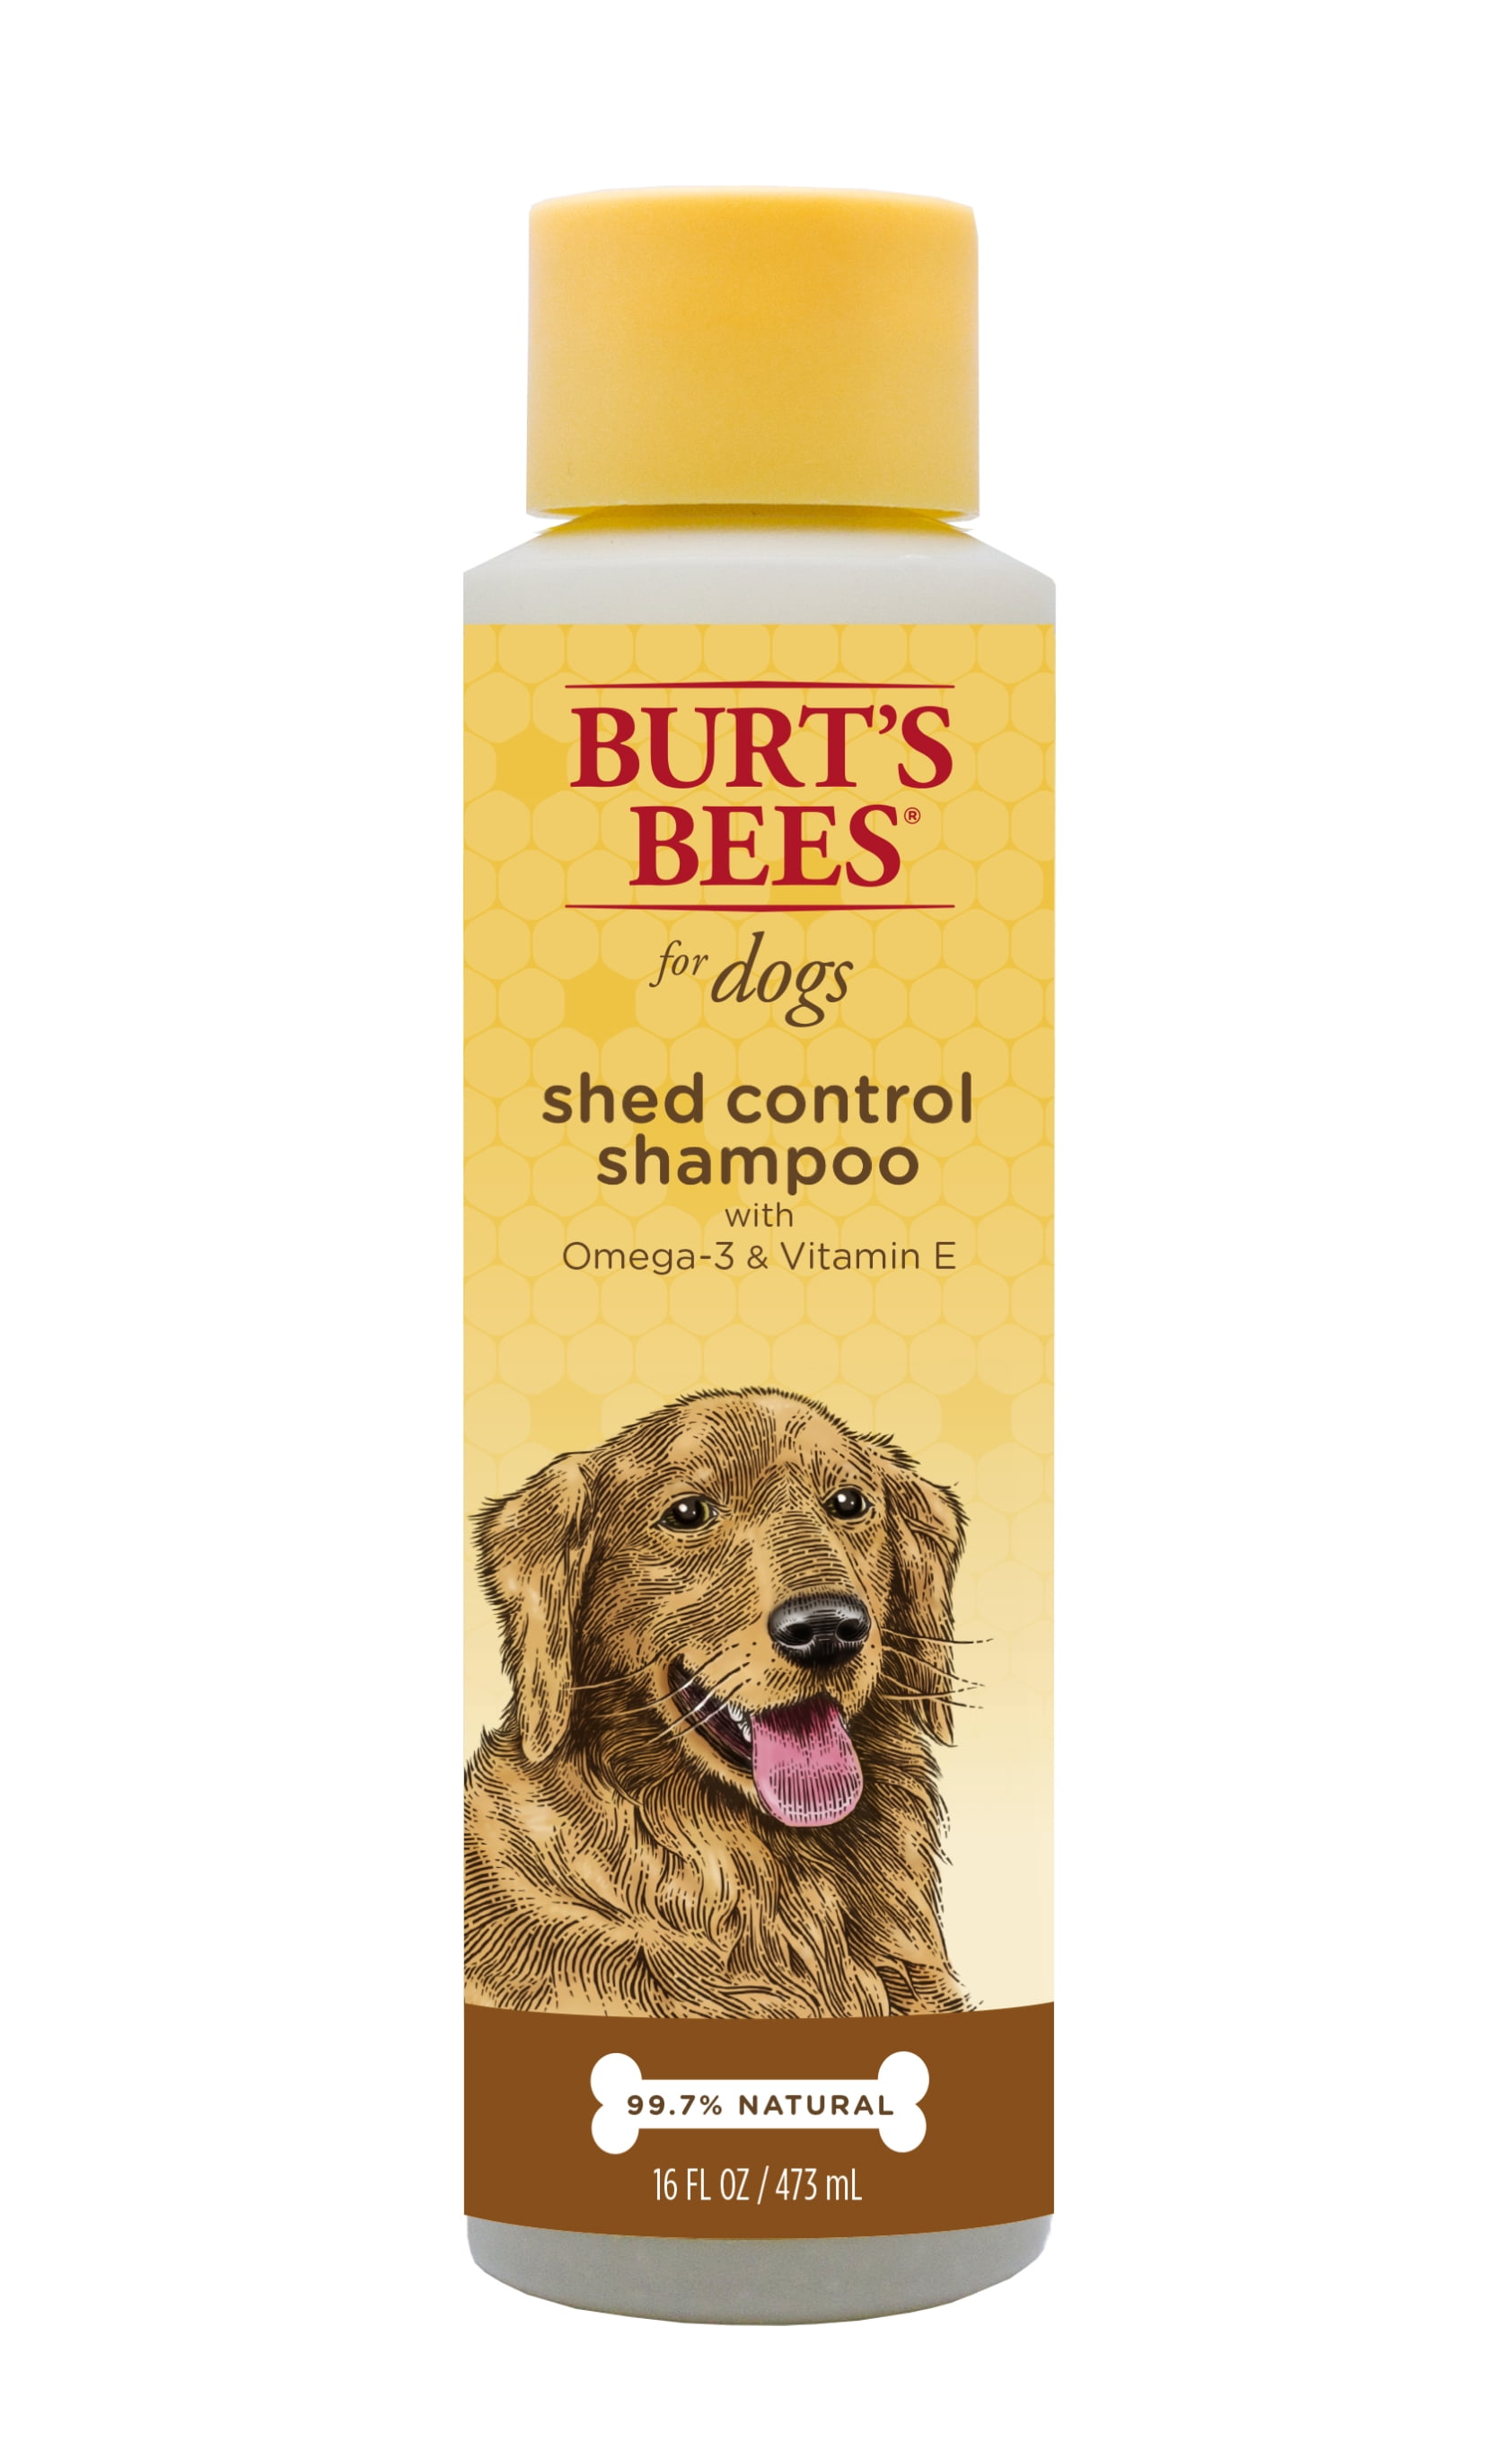 burt's bees dog shampoo death